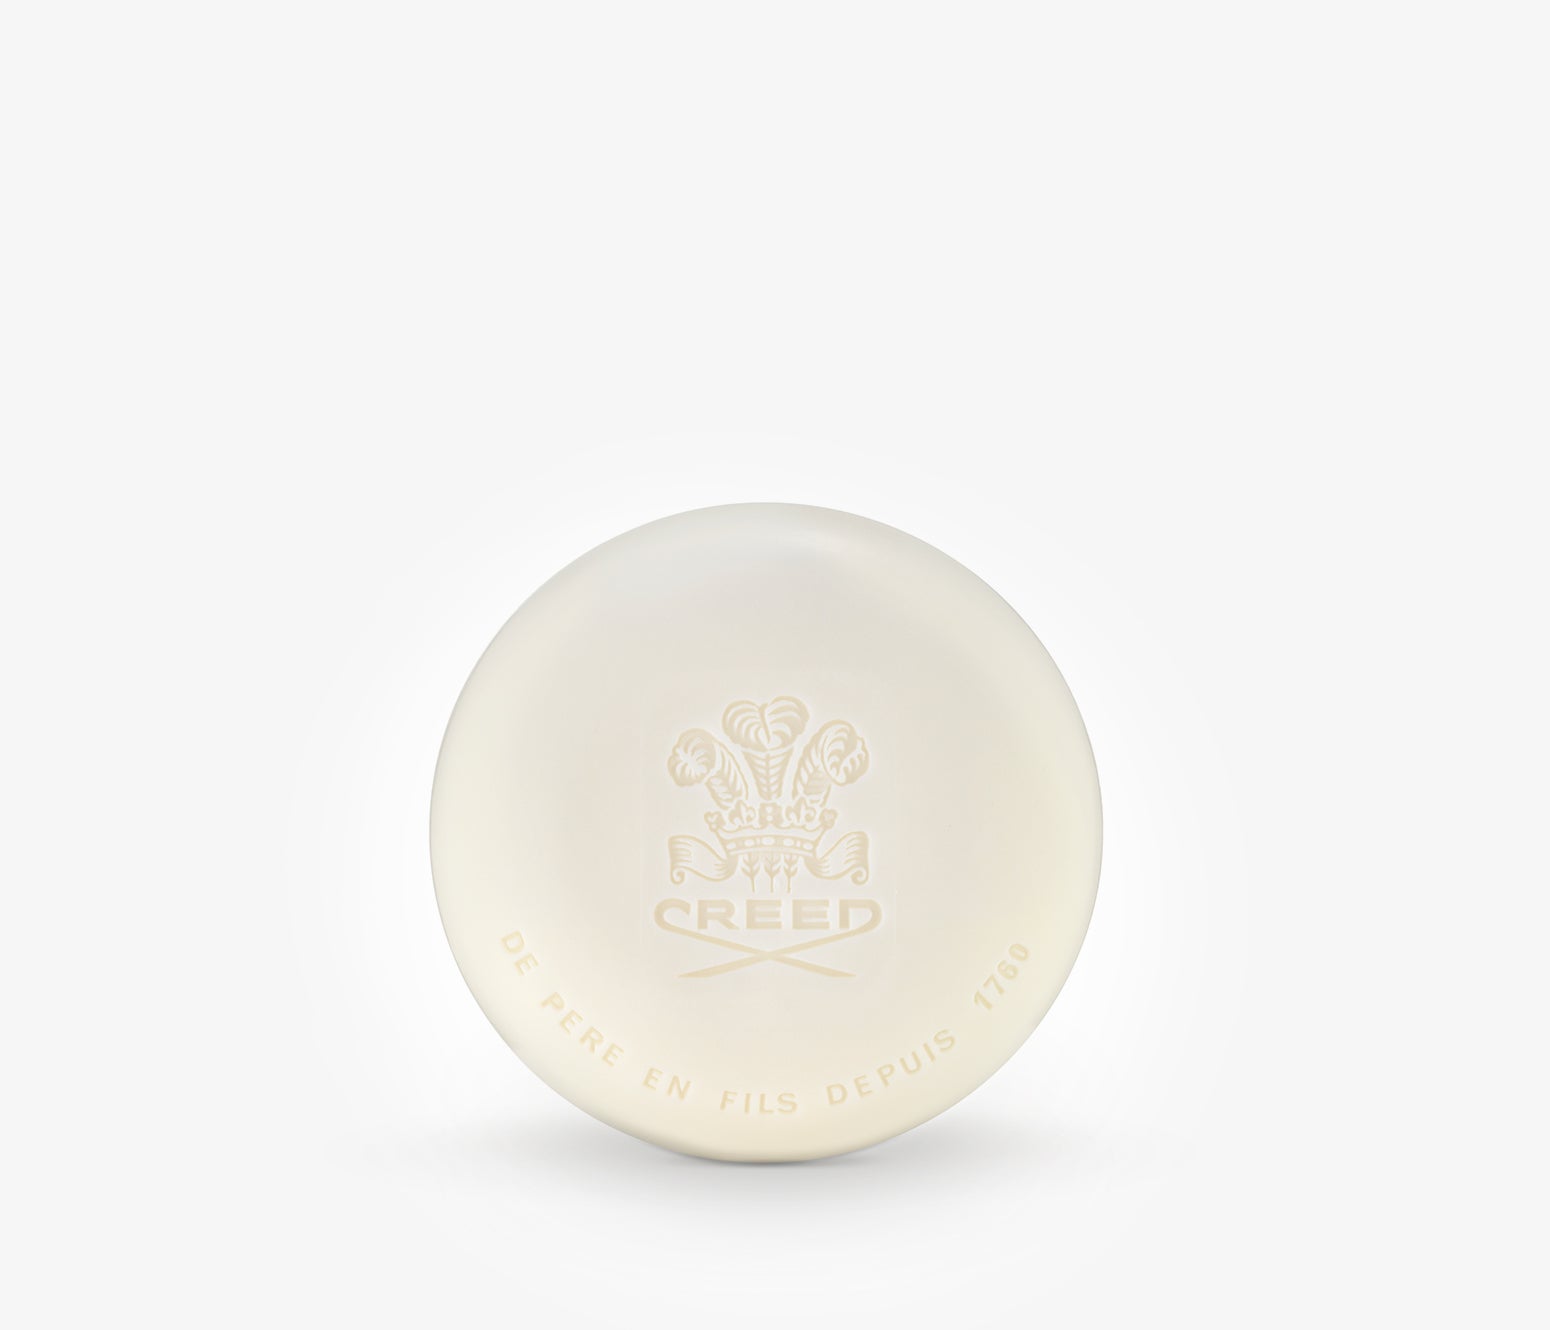 Creed - Green Irish Tweed Soap - 150g - 10000240 - Product Image - Fragrance - Les Senteurs